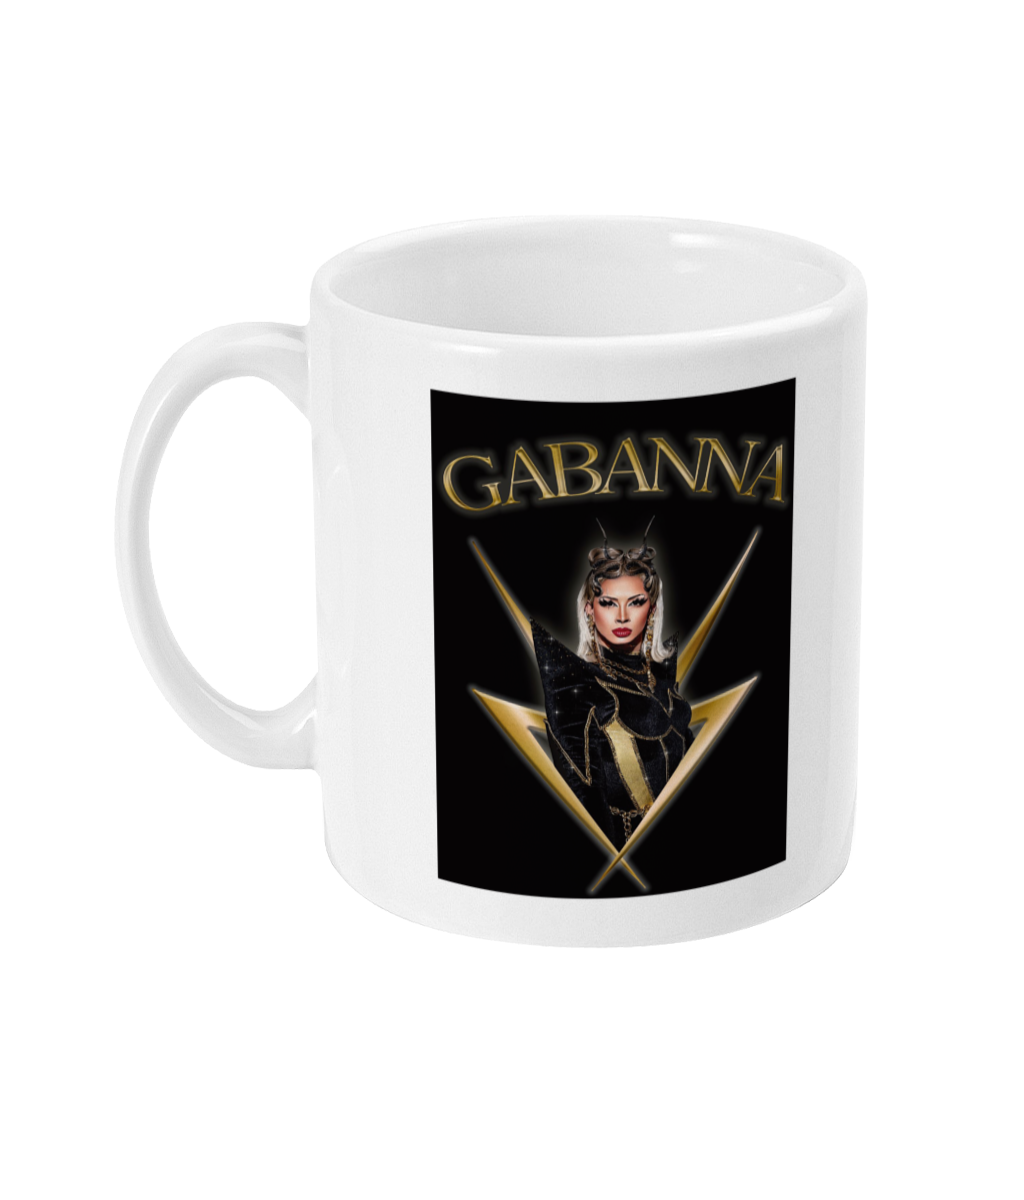 Gabanna - Black & Gold Mug